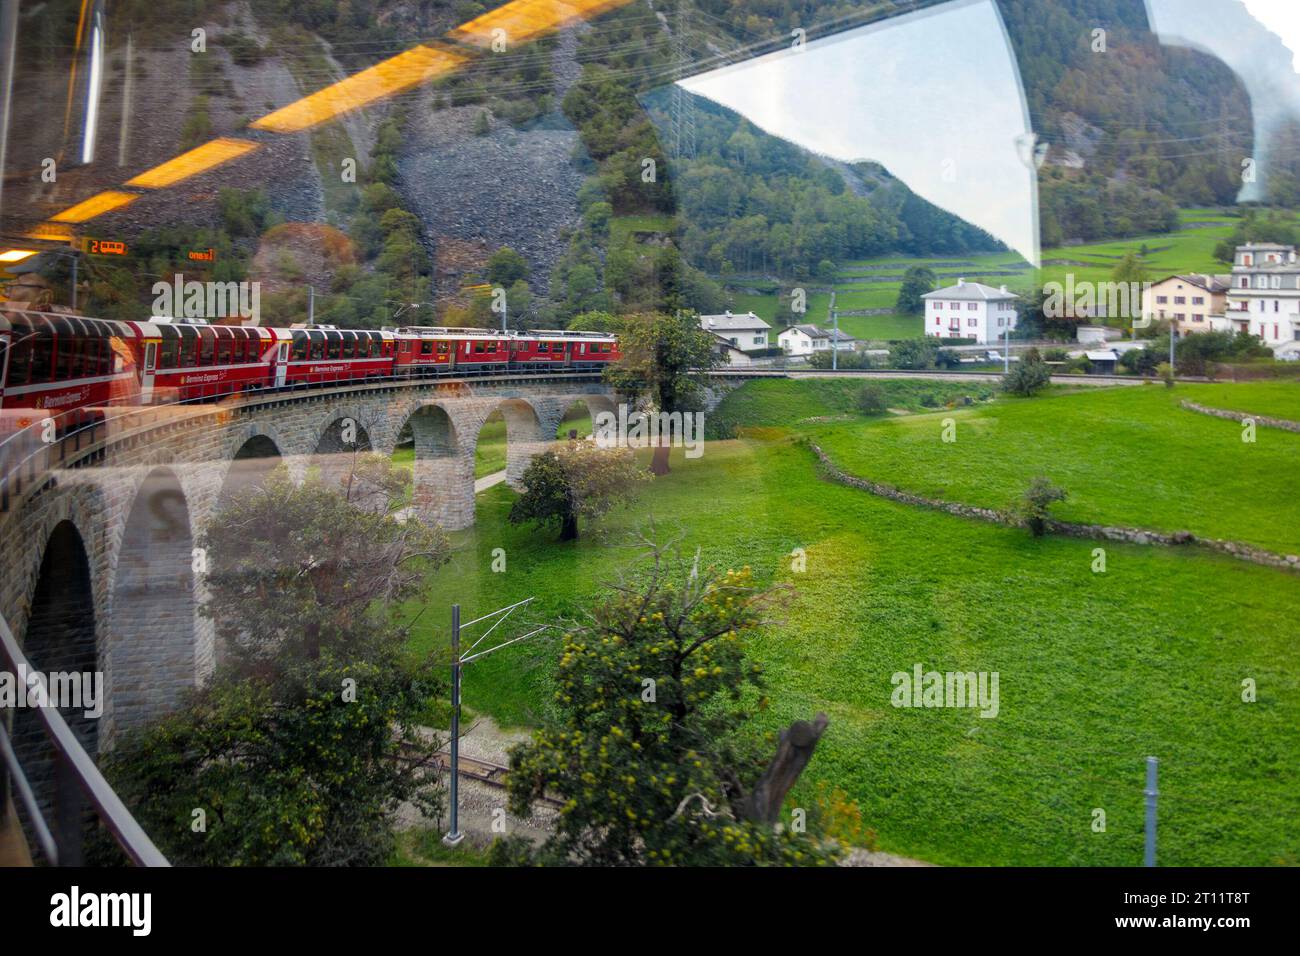 View from inside the Bernina Express train in Switzerland, Europe Stock Photo